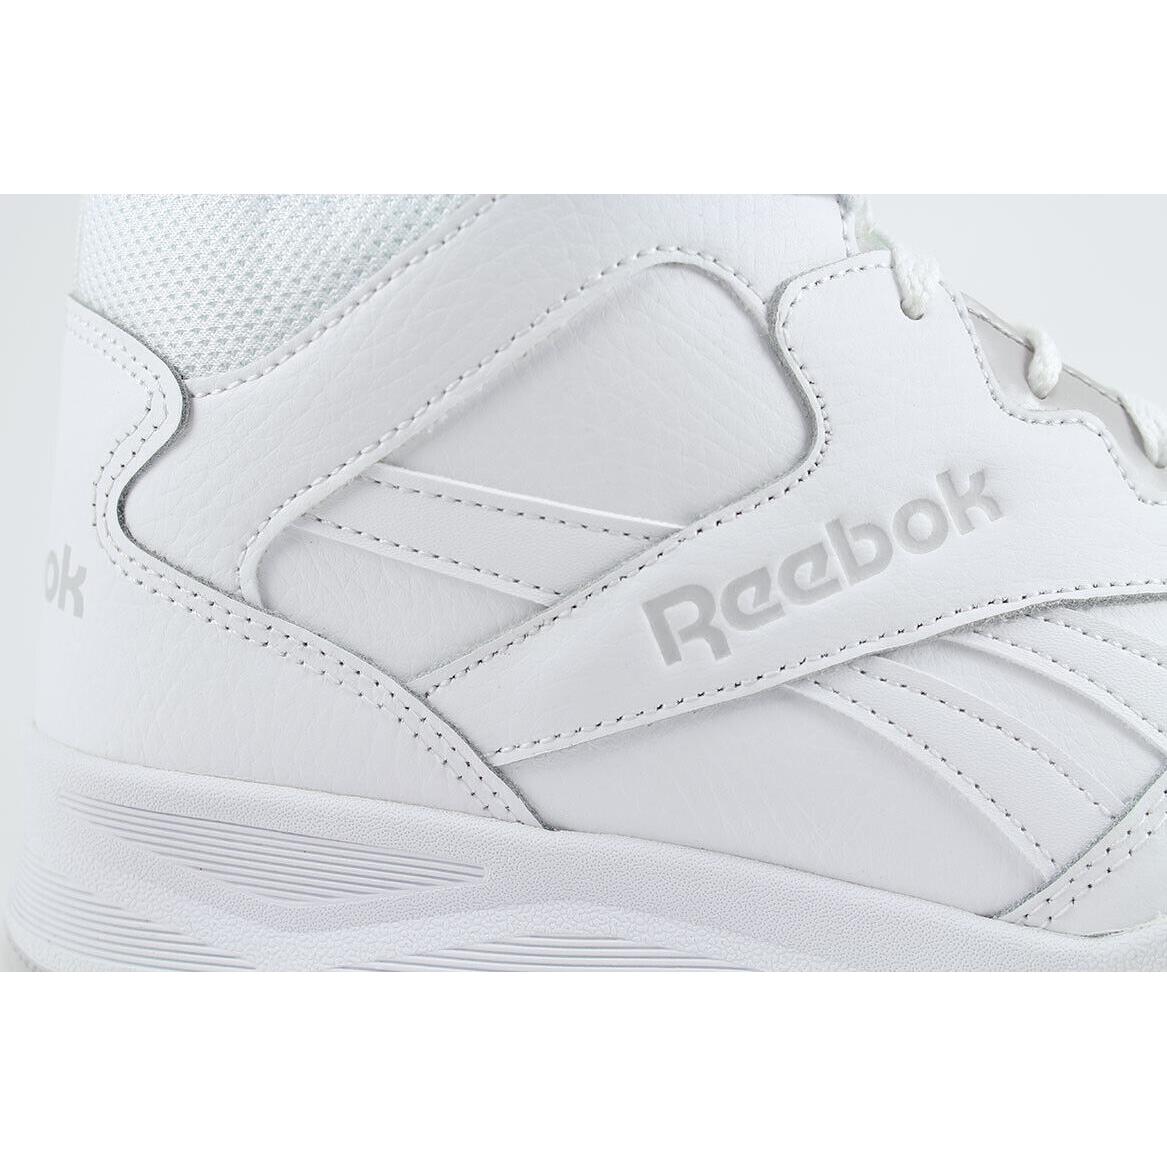 Reebok shoes Royal - White , White/Light Solid Gray Full way 6